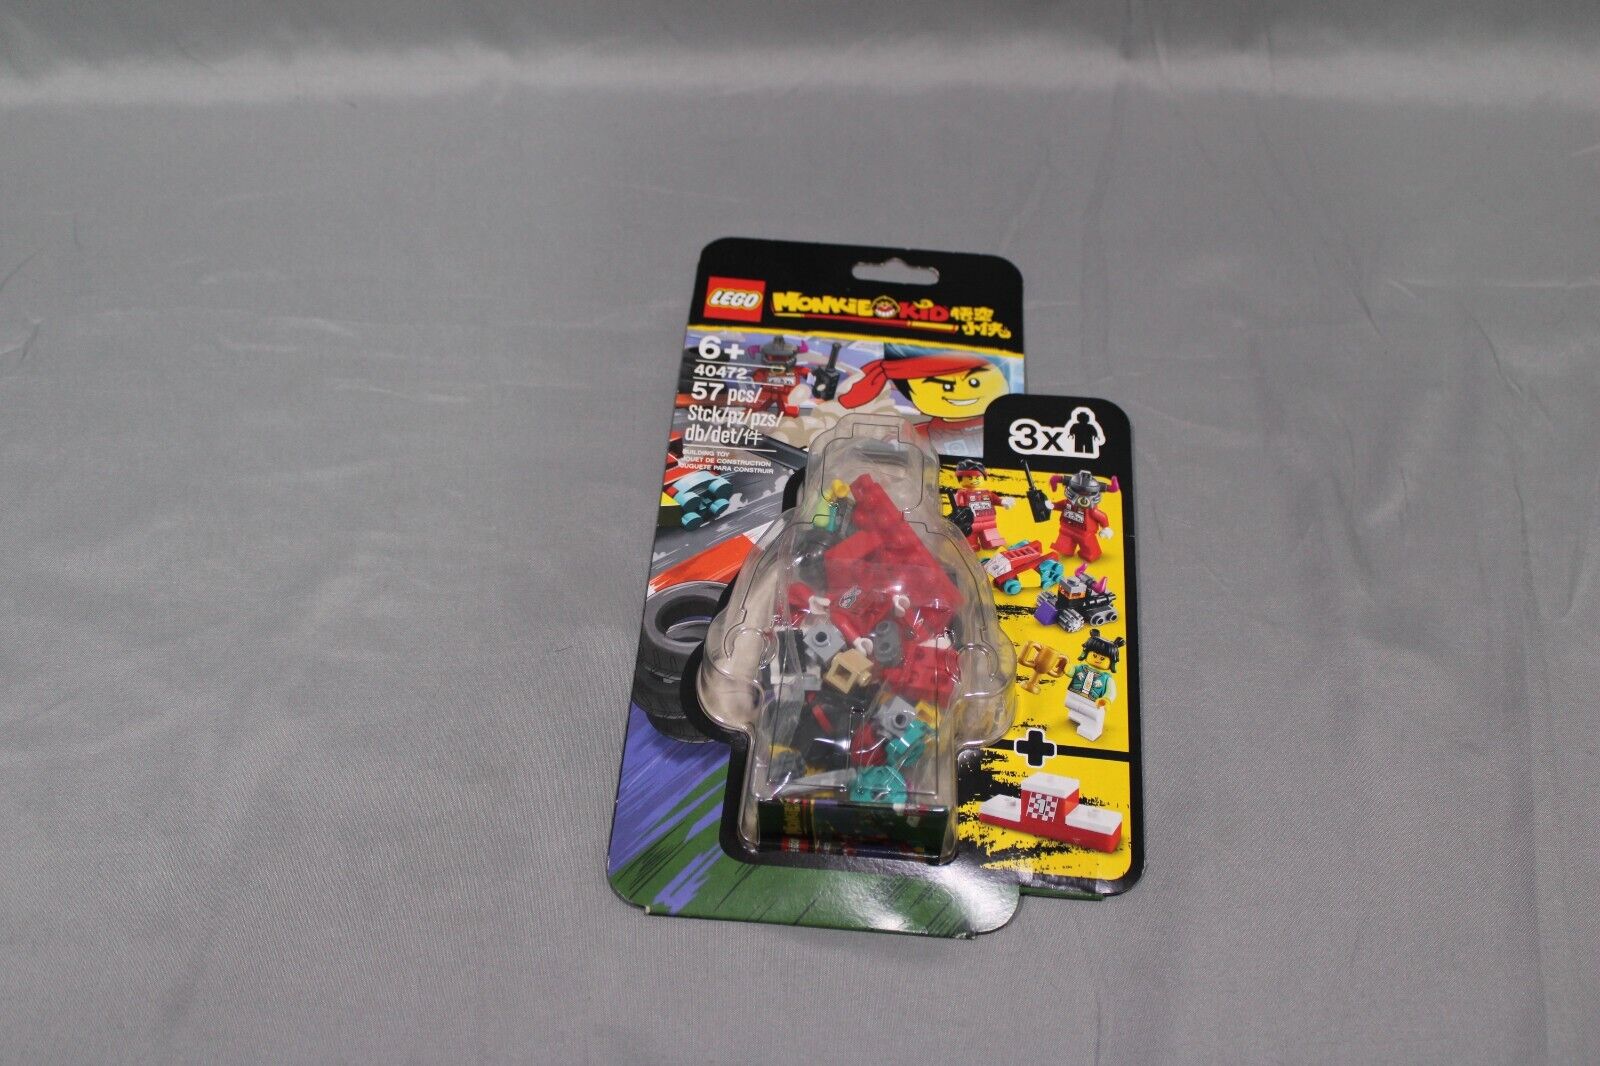 LEGO MONKIE KID 40472 Monkie Kid's RC Race Minifigures Set (H3)